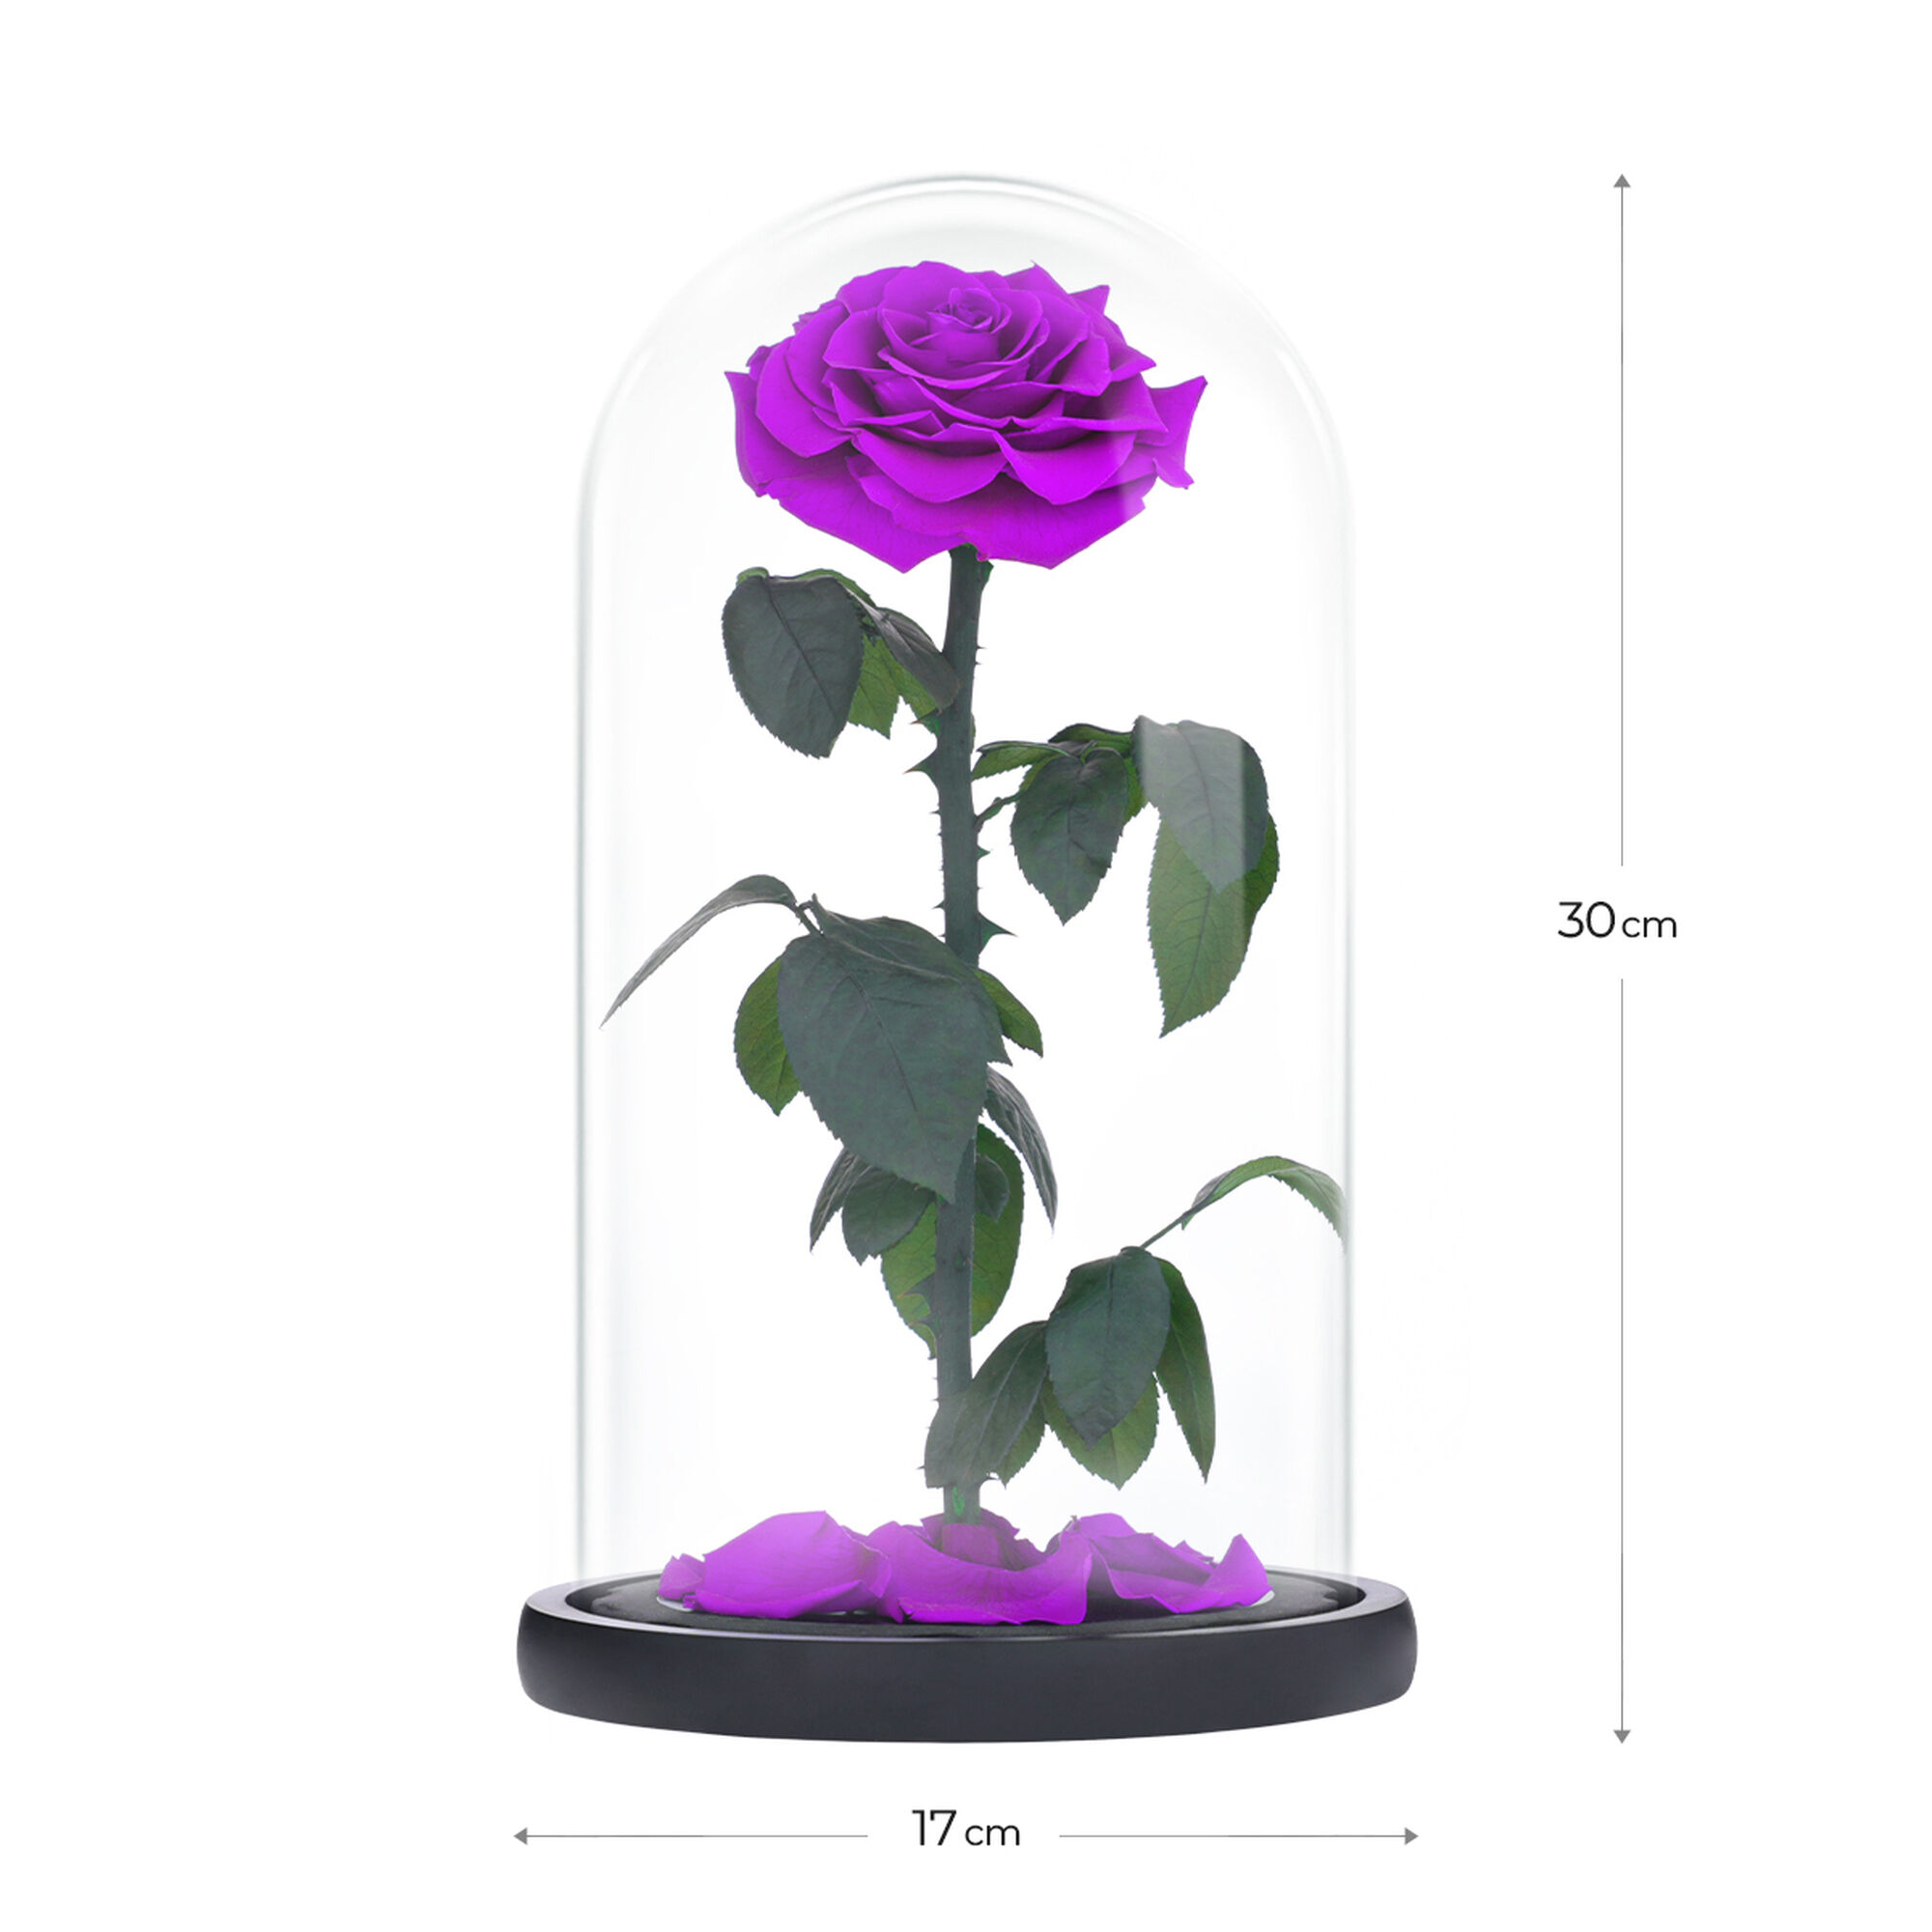 Large purple everlasting natural roses